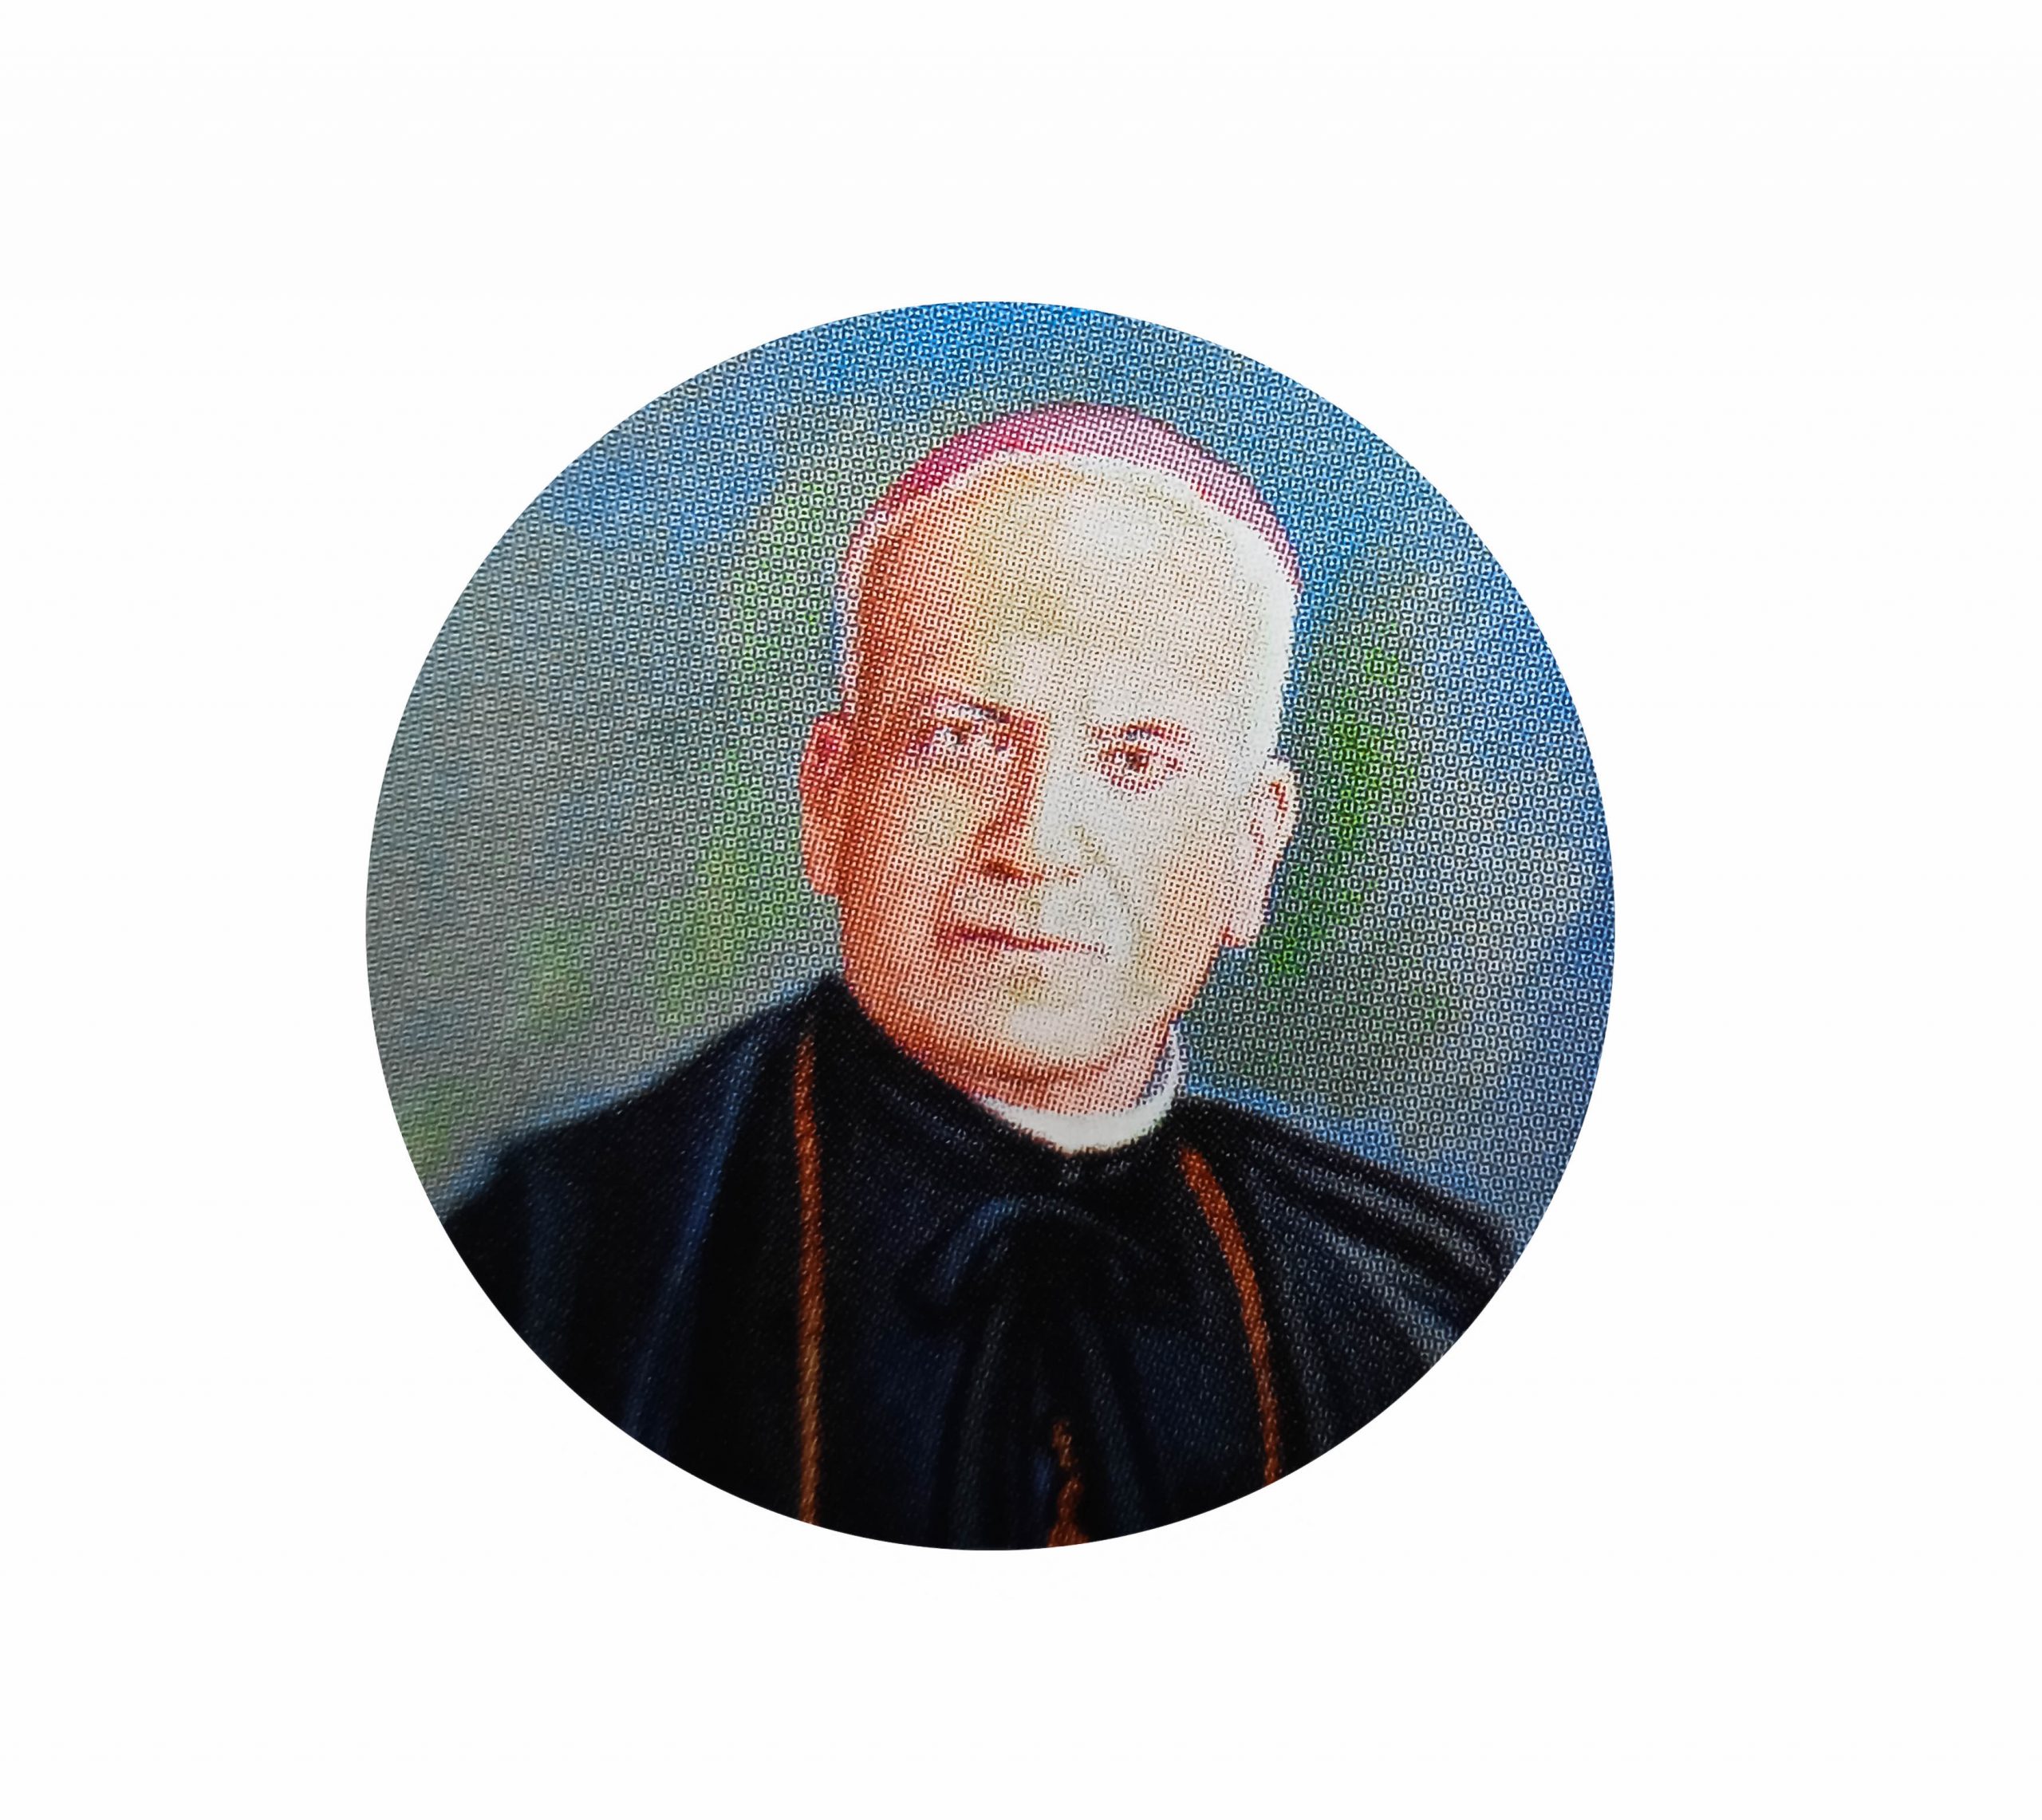 Mons. Maximiliano Crespo Rivera